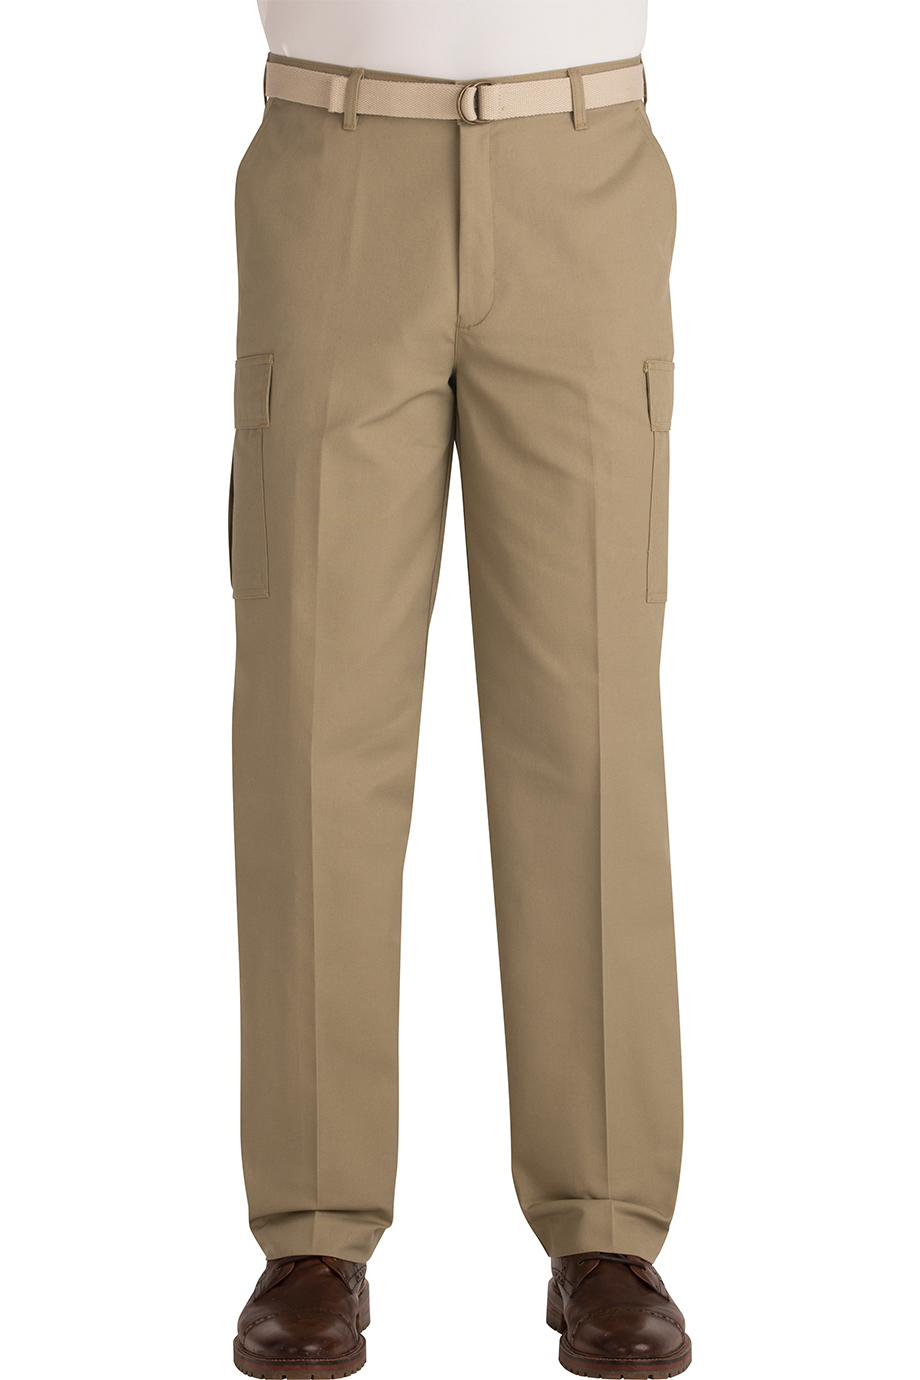 Edwards Garment 2575 - Men's Blended Chino Cargo Pant